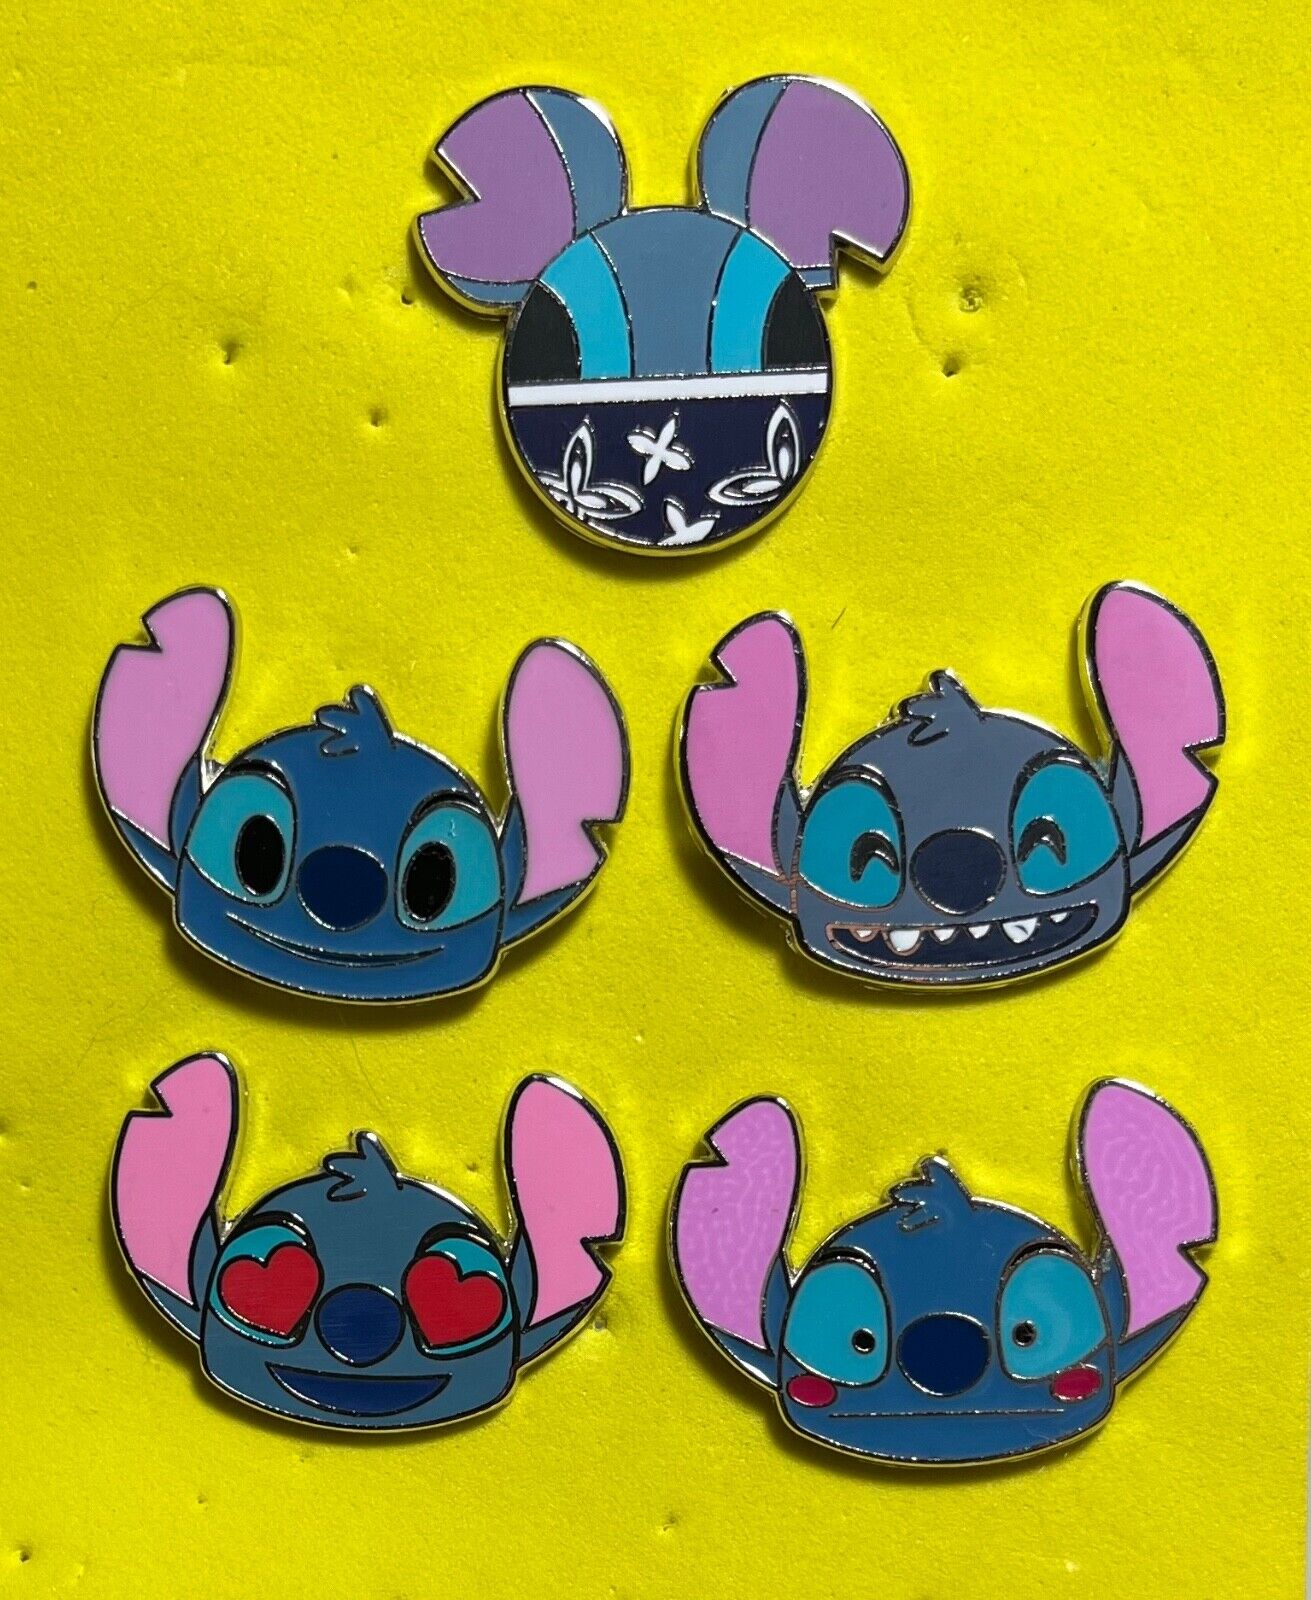 Lot of 5 Stitch Disney Trading Pins